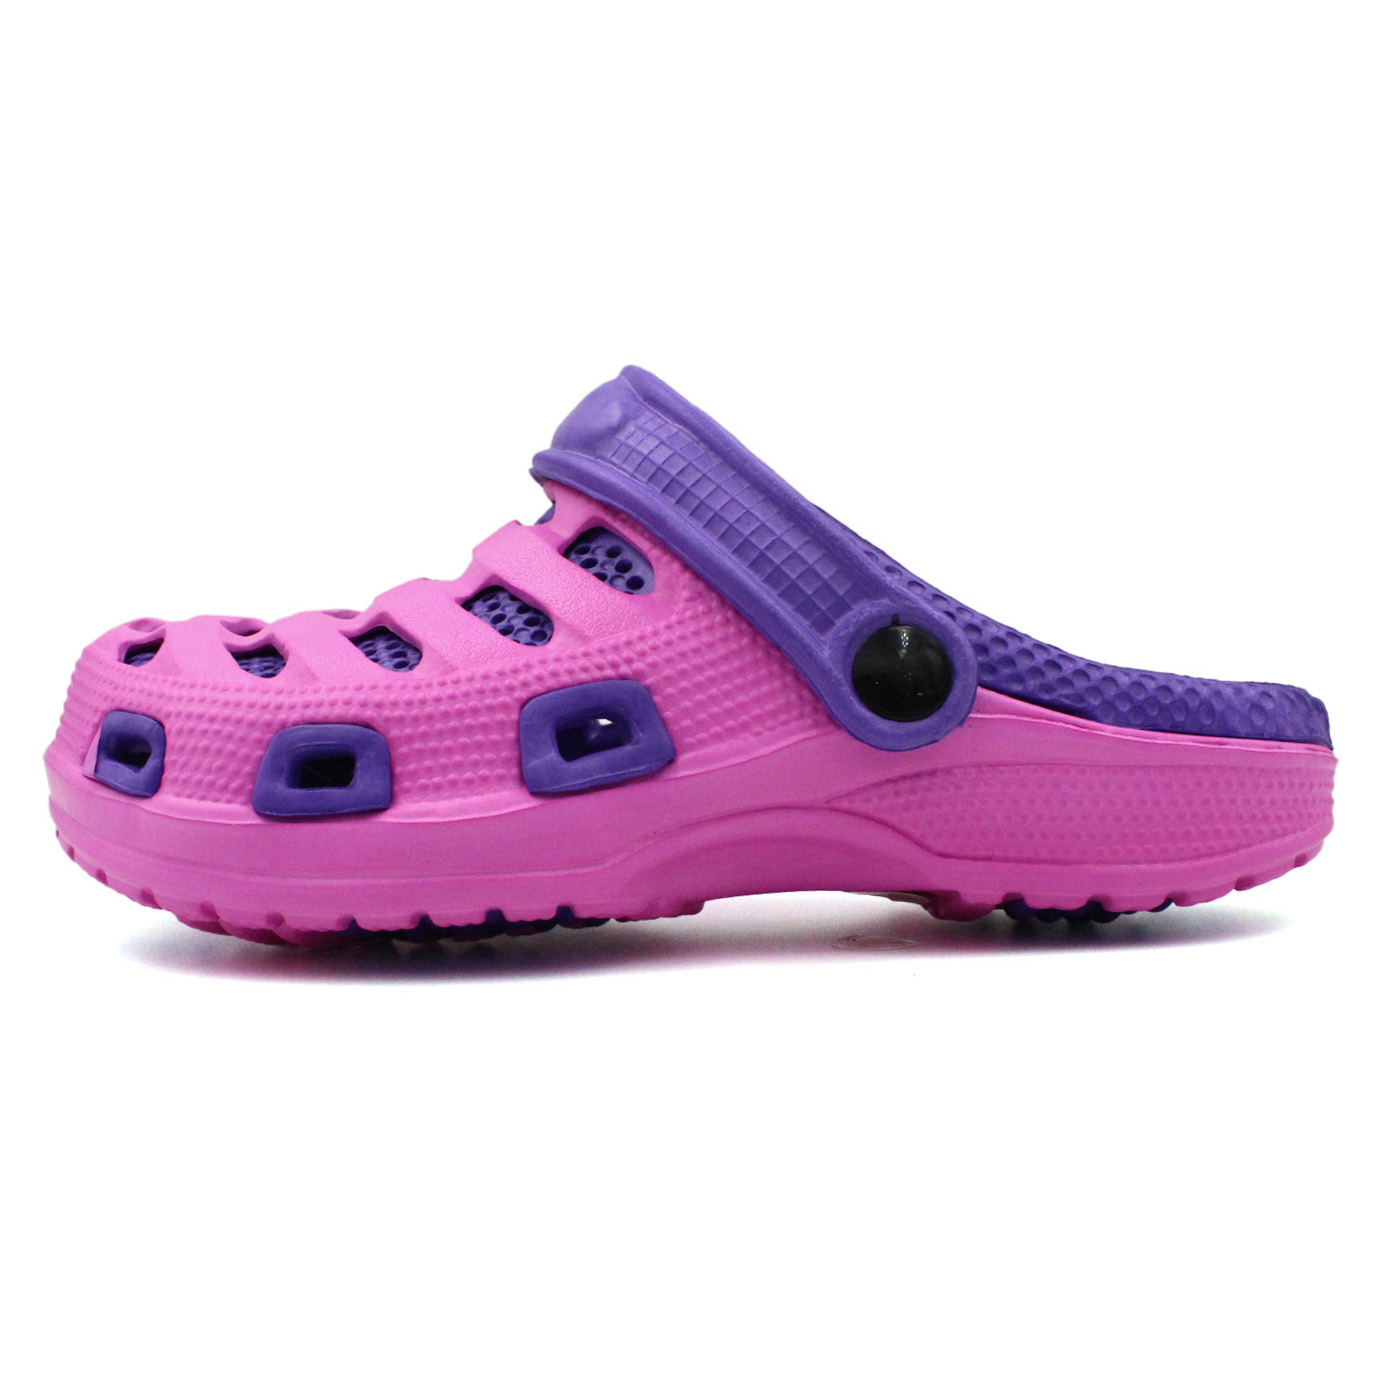 Women's Clogs EVA Garden Nursing Shoes Summer Sandals | eBay